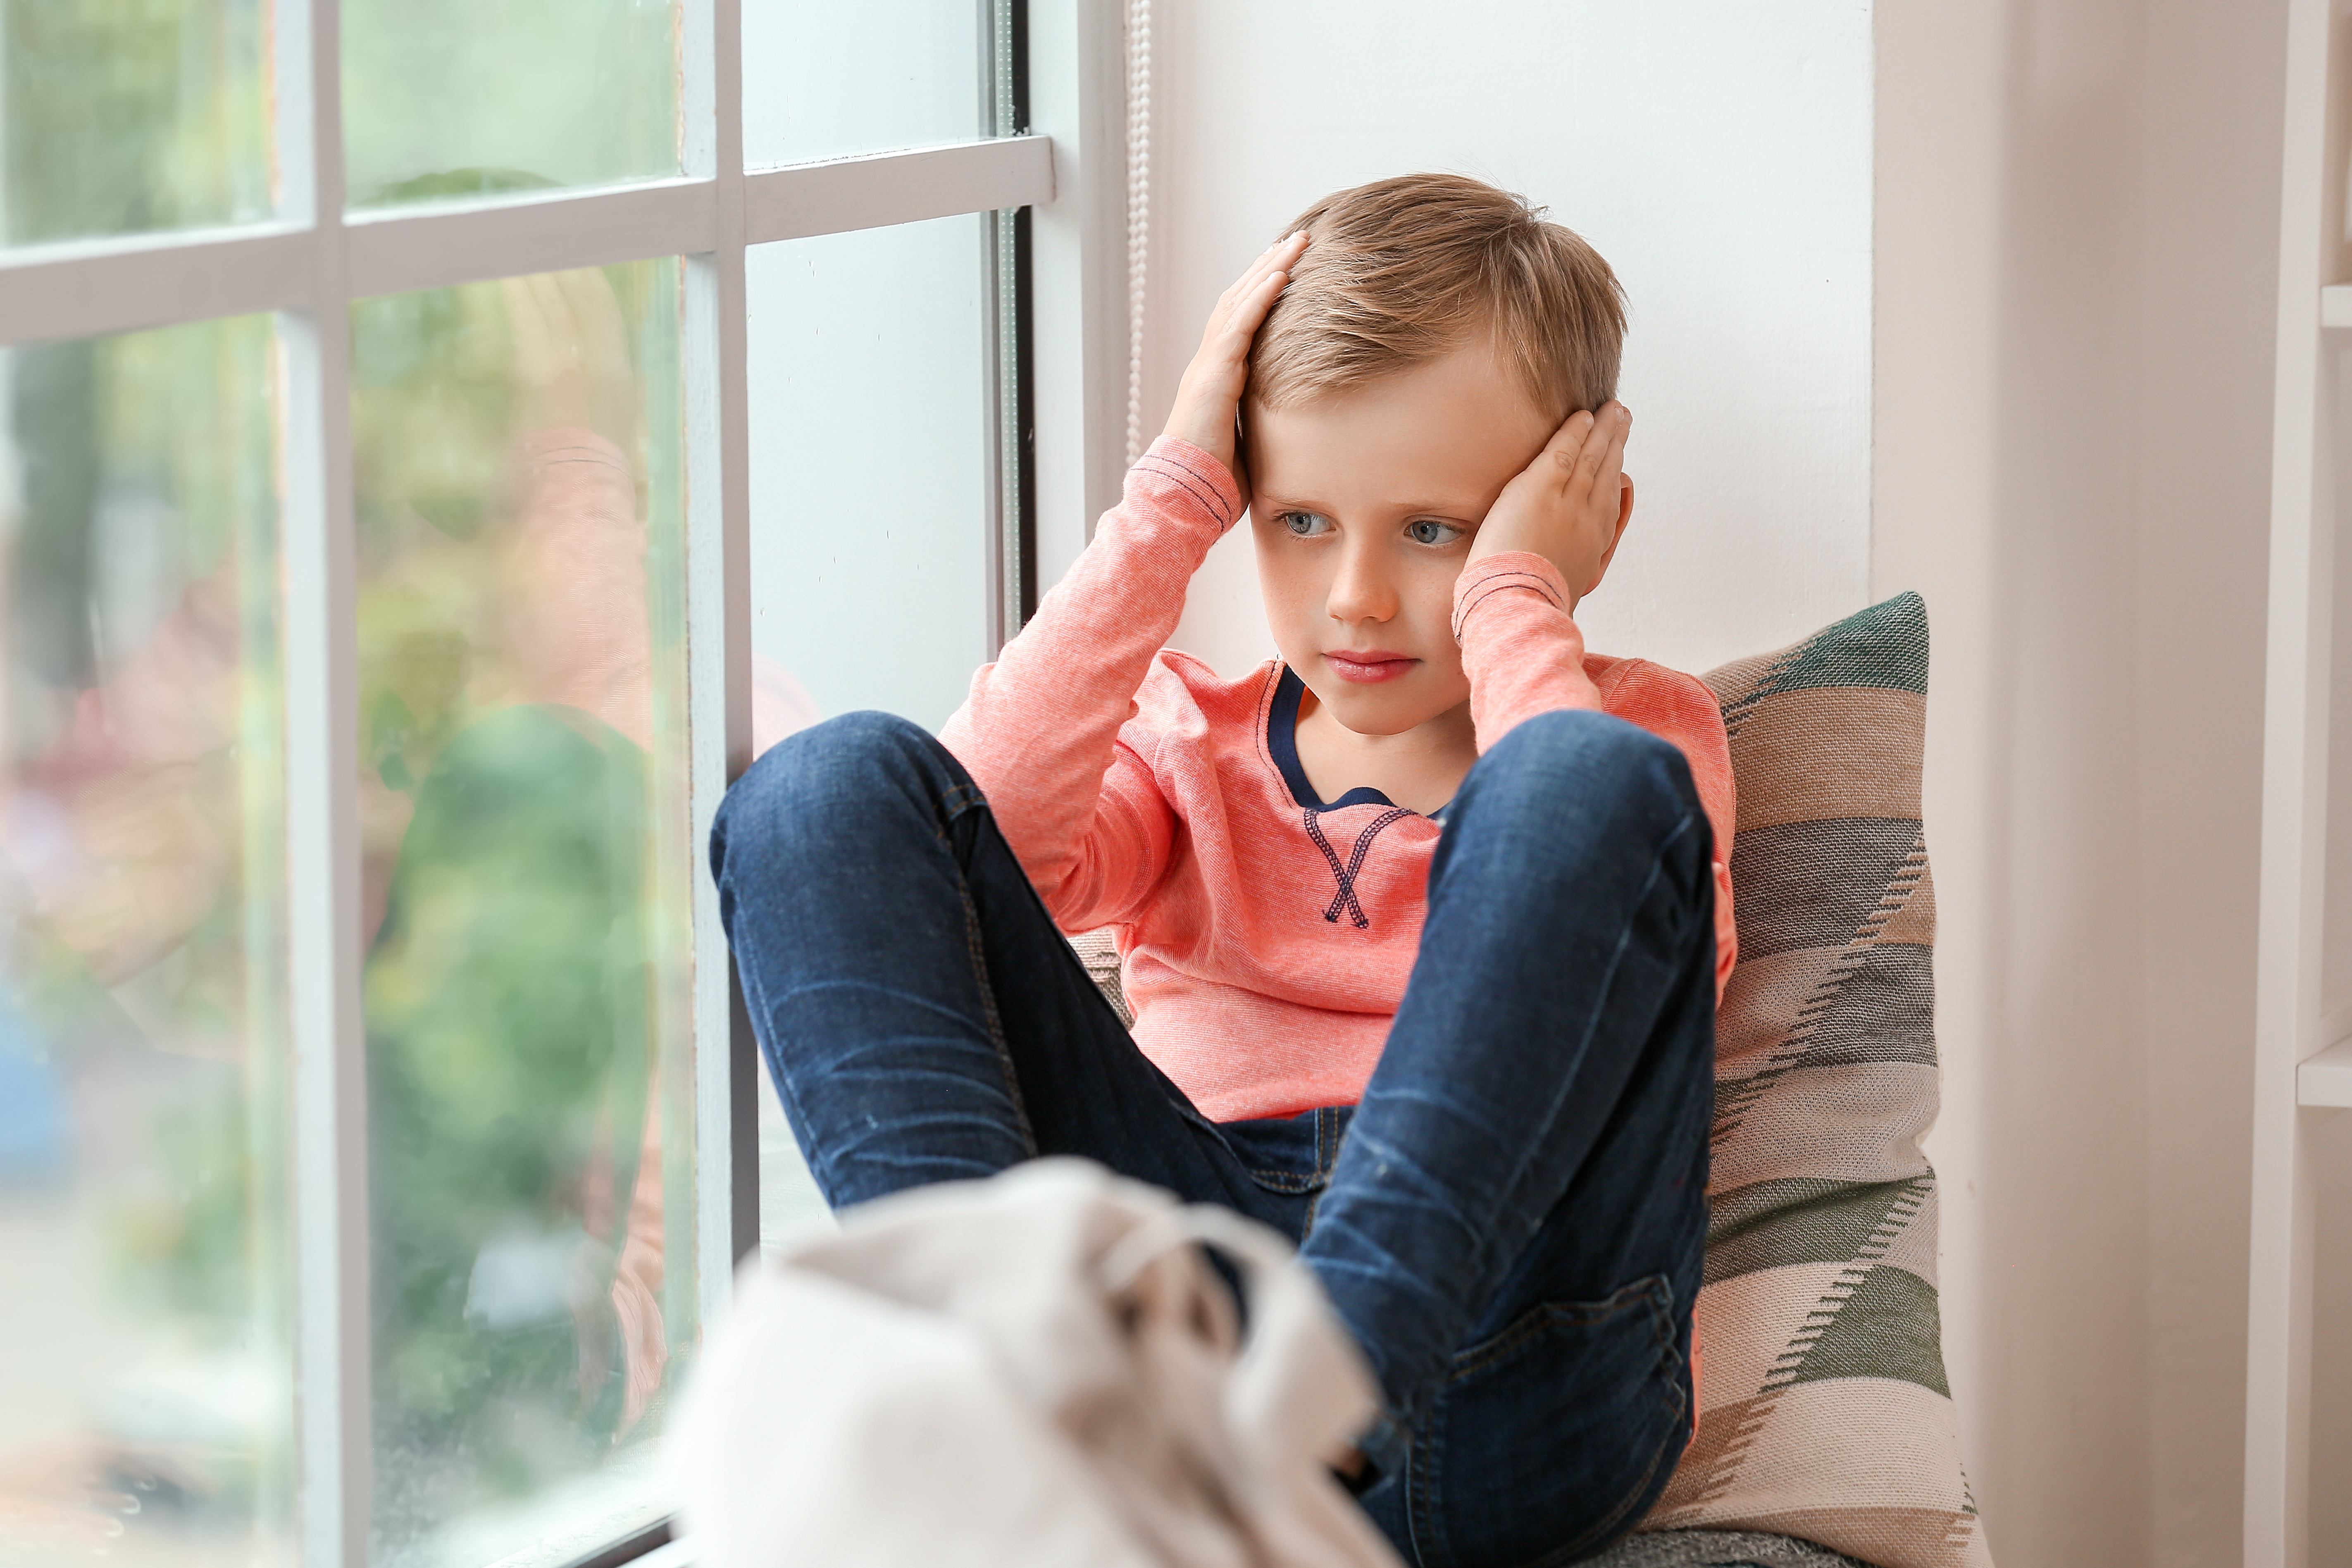 Sad little boy. | Source: Shutterstock